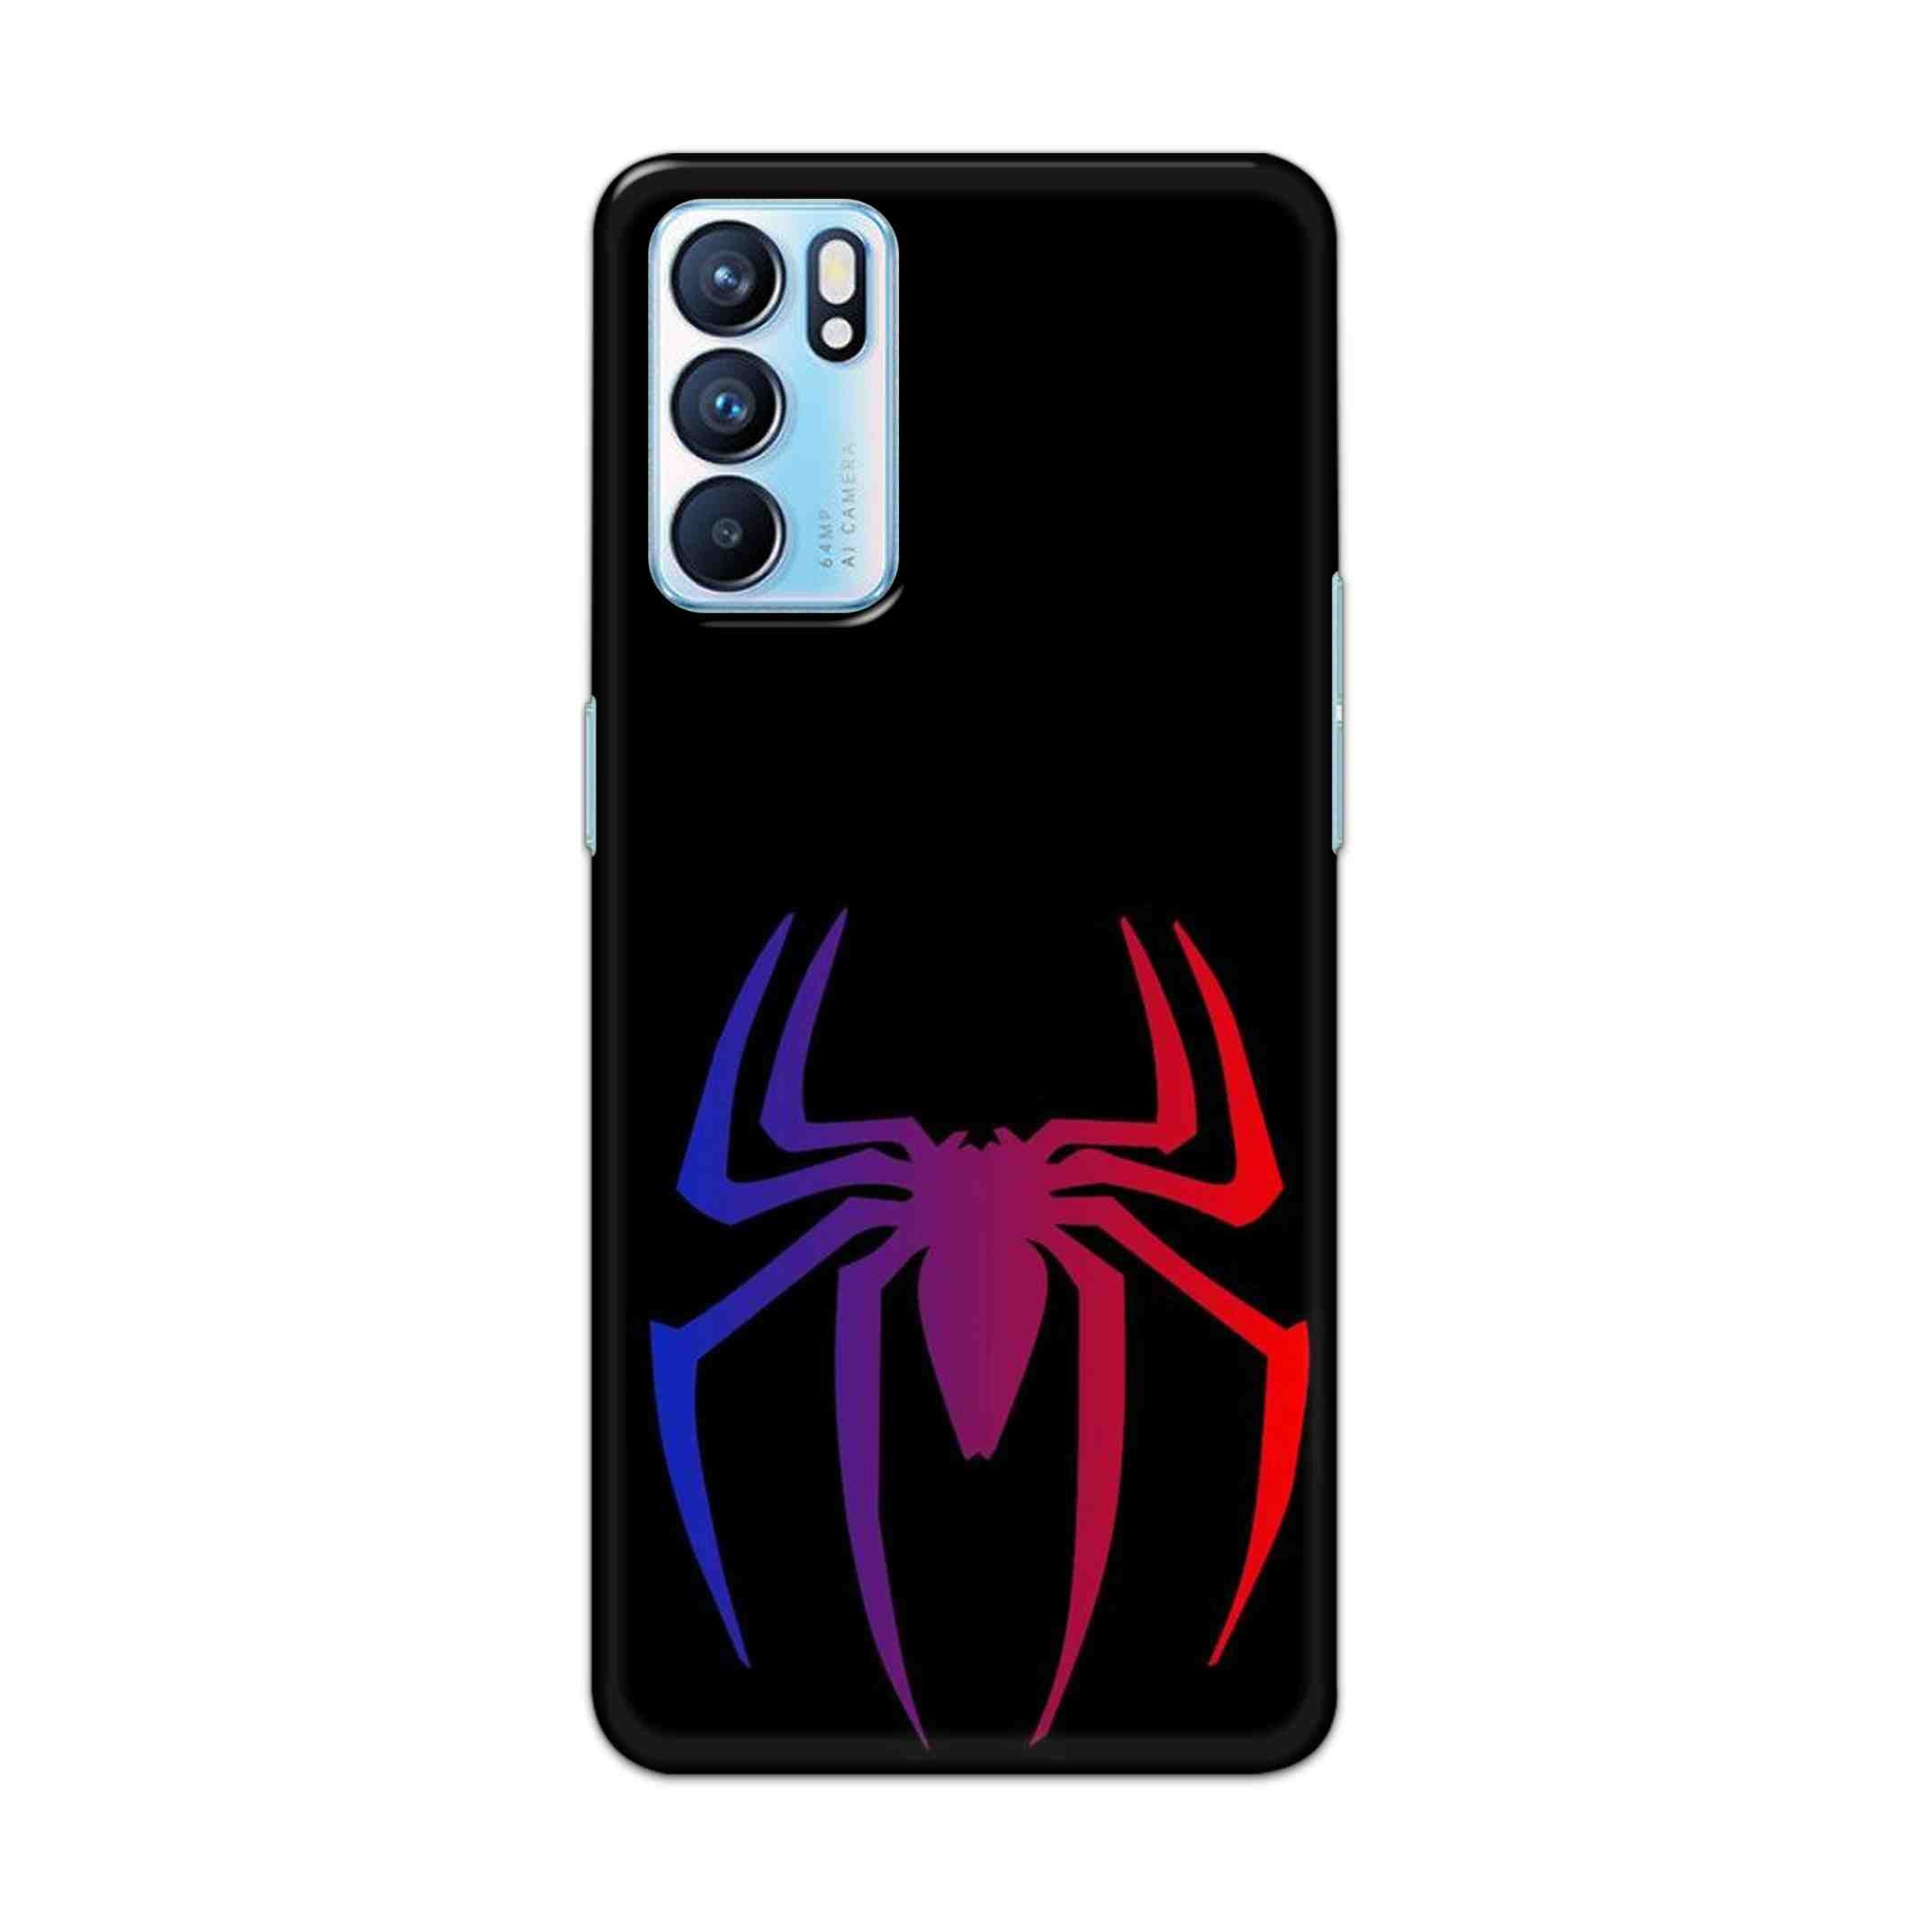 Buy Neon Spiderman Logo Hard Back Mobile Phone Case Cover For OPPO RENO 6 Online